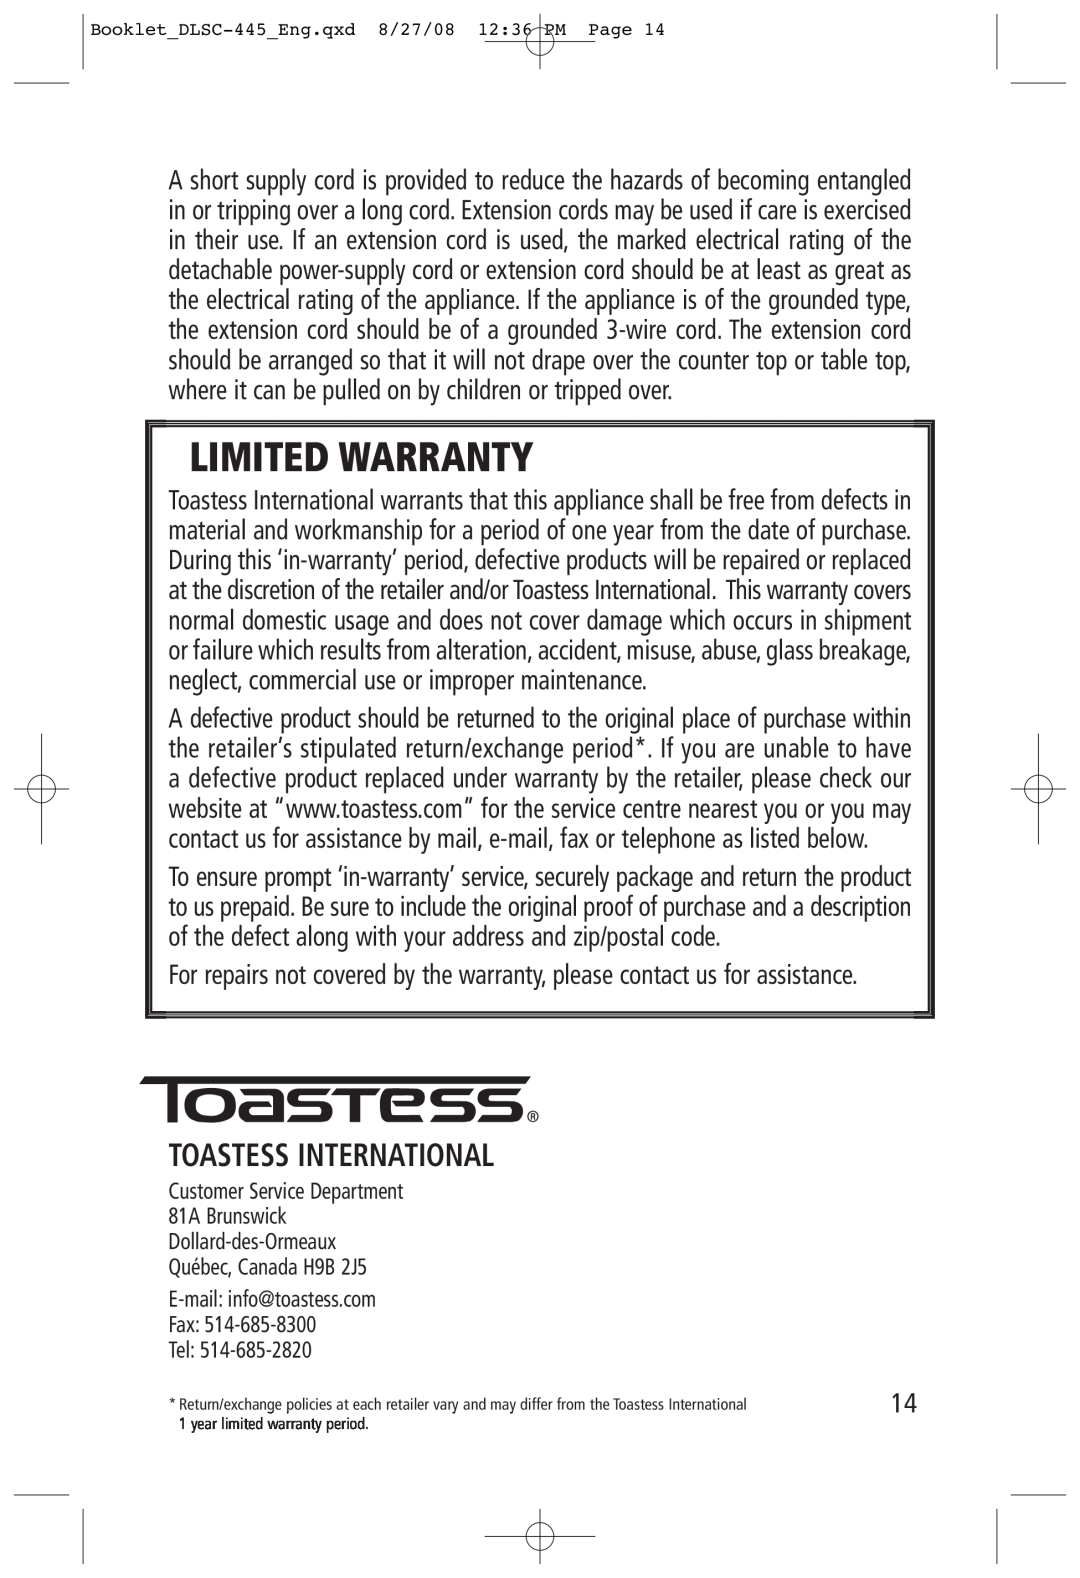 Toastess DLSC-445 manual Toastess International, Limited Warranty 